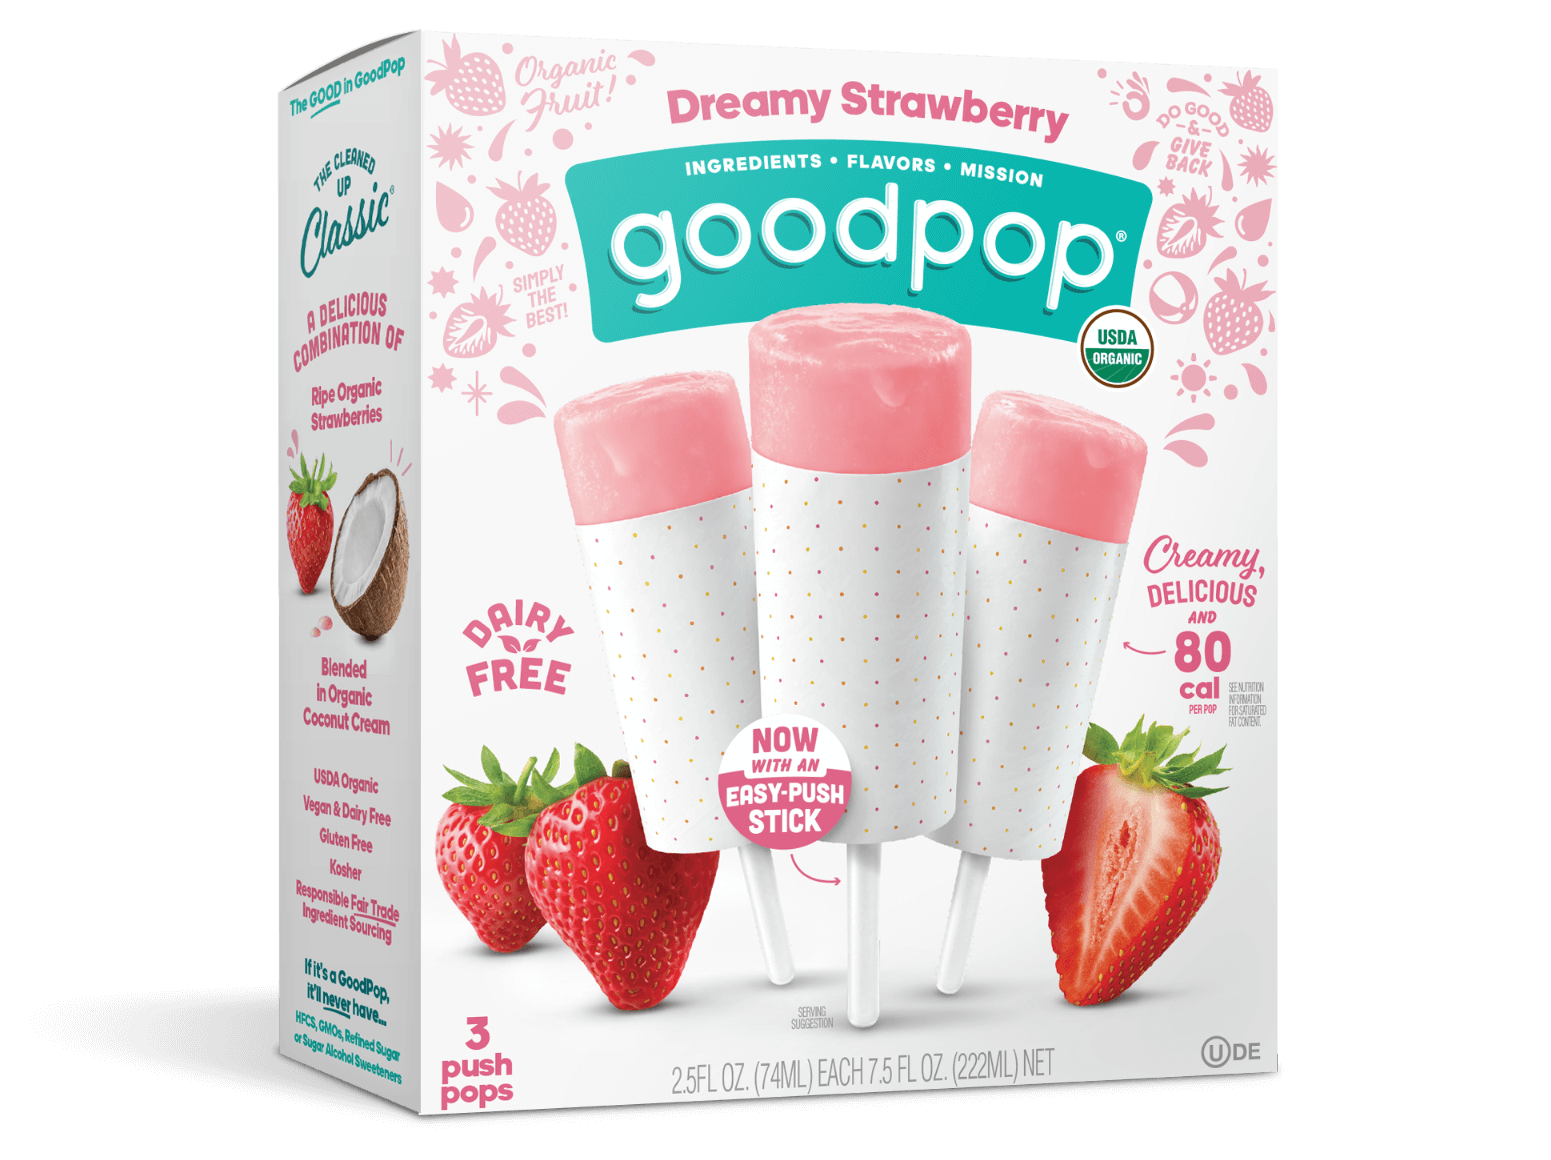 https://goodpop.com/wp-content/uploads/2021/02/dreamy-strawberry-box.png